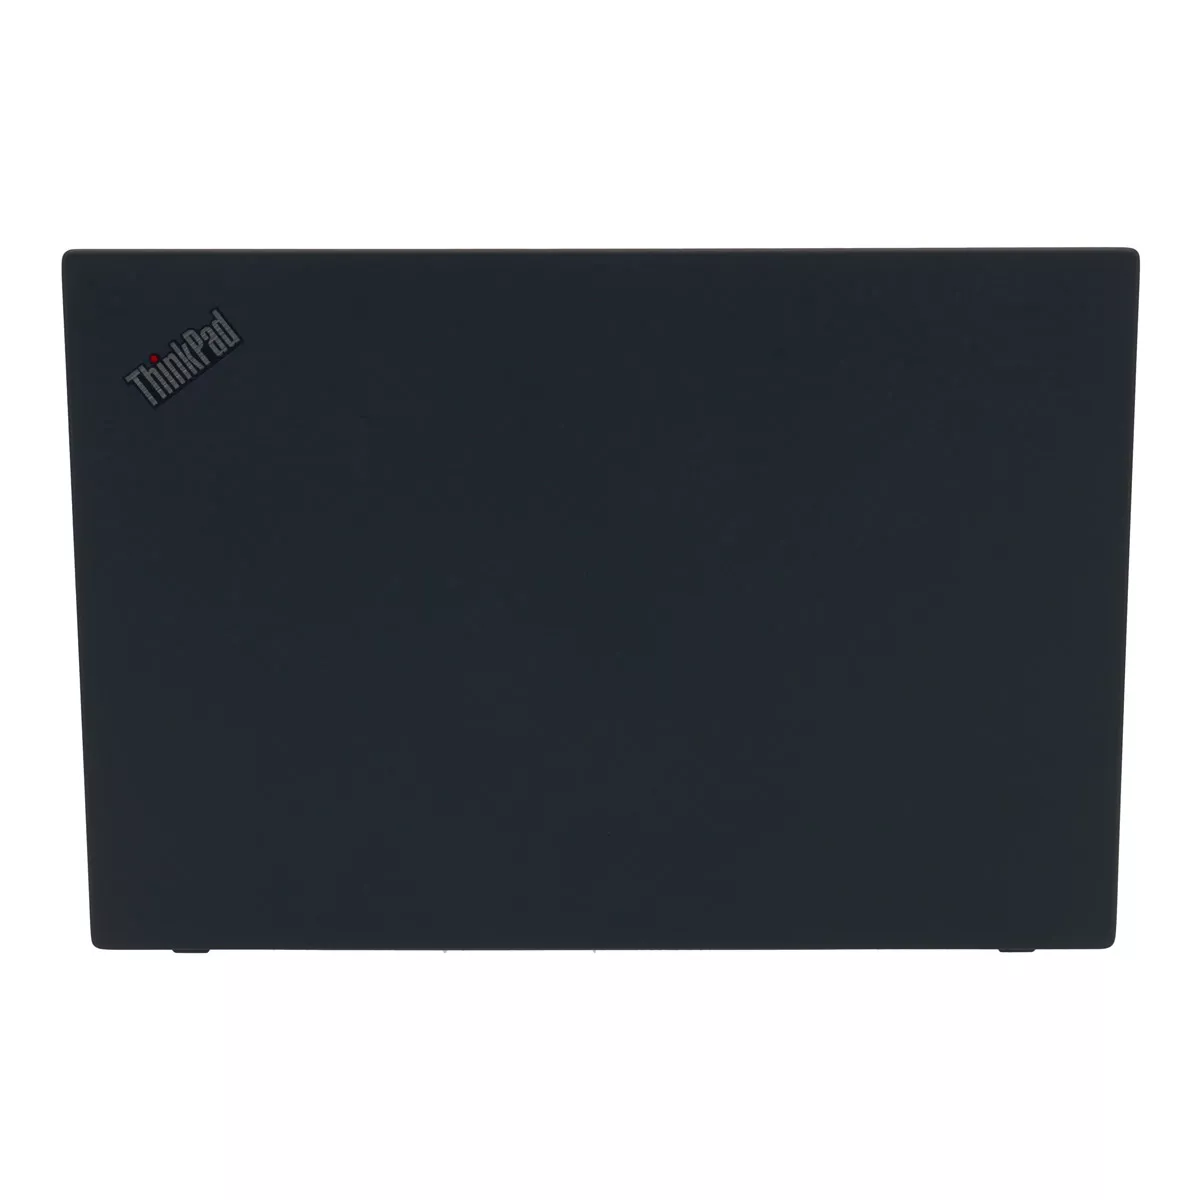 Lenovo ThinkPad T490 Core i5 8265U Full-HD 8 GB 240 GB M.2 nVME SSD Webcam A